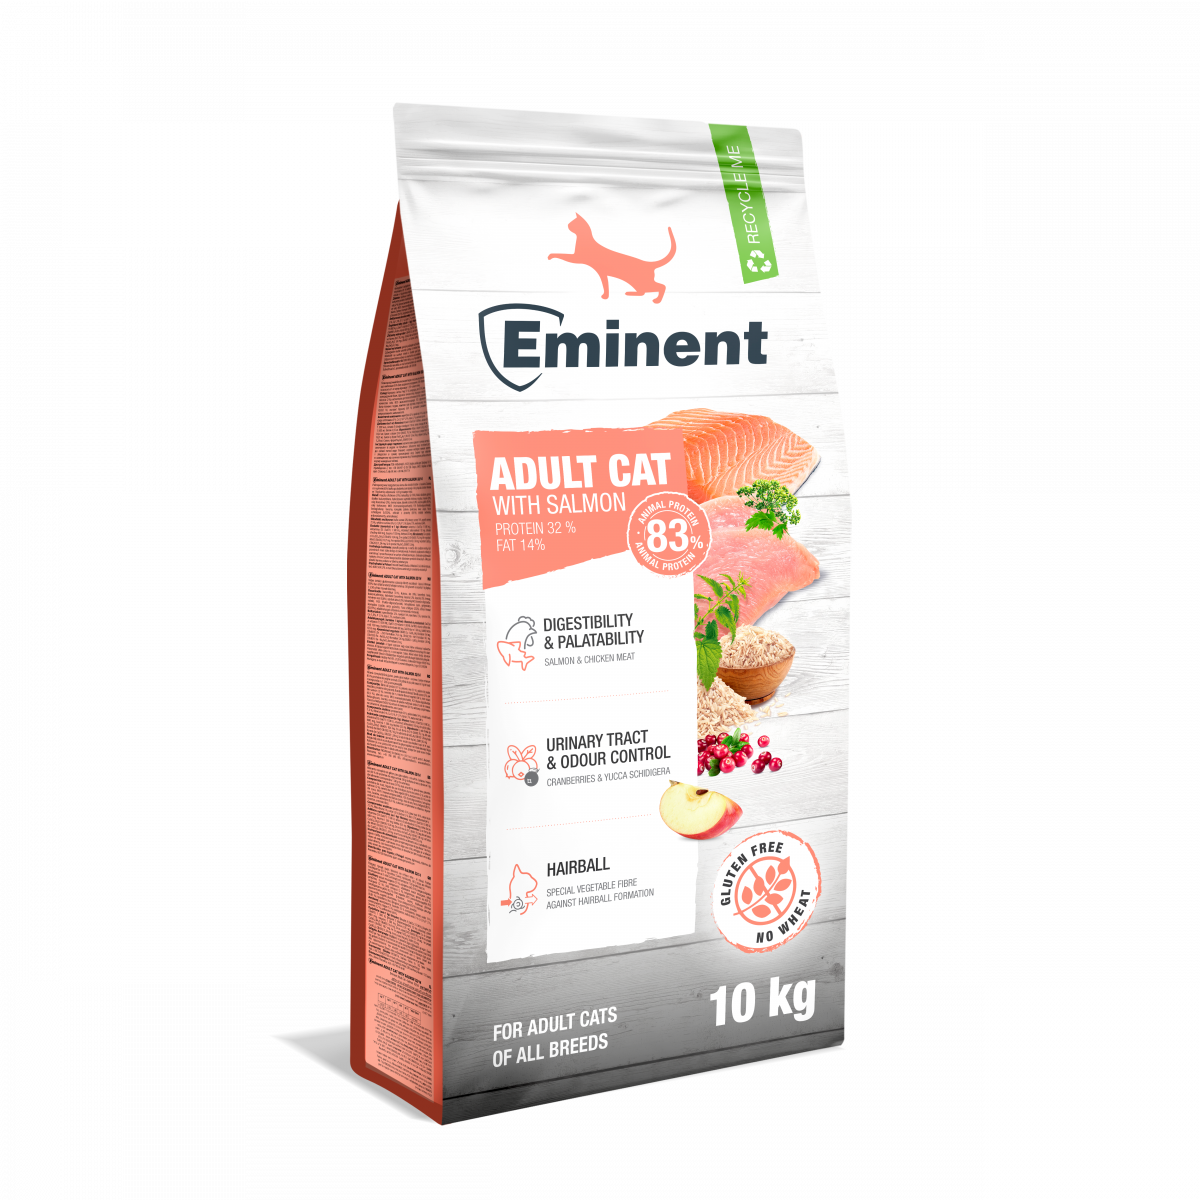 Eminent cat adult salmon 10kg